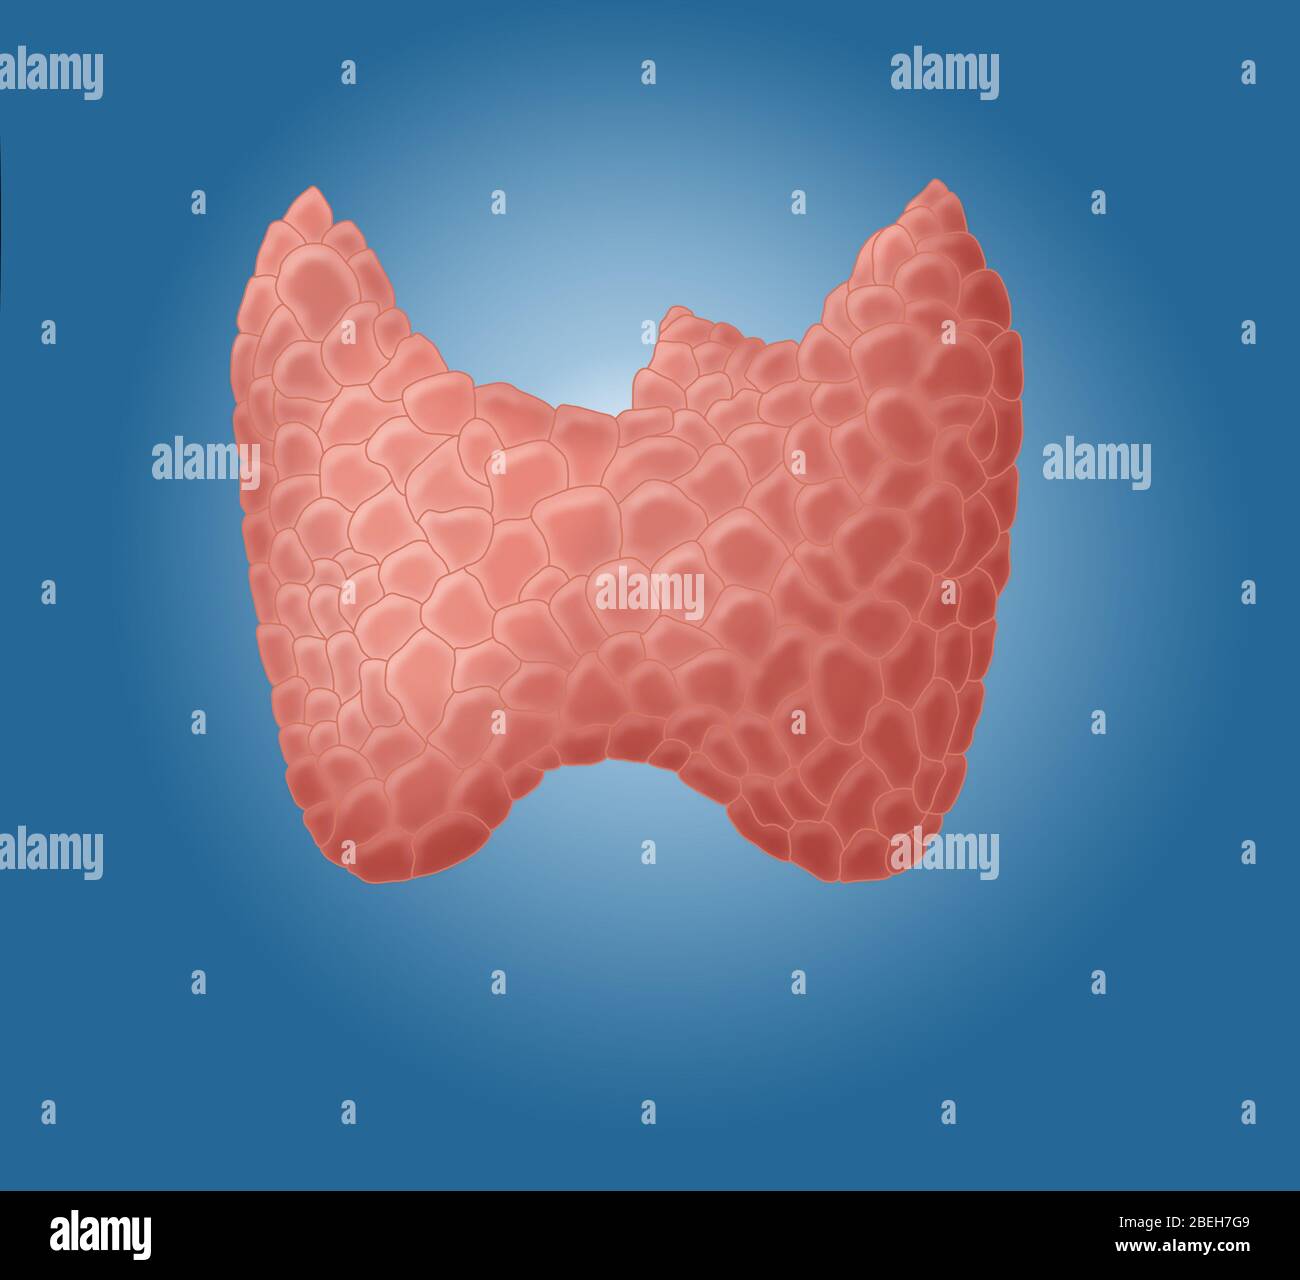 Ilustración anatómica de la glándula tiroides. Foto de stock